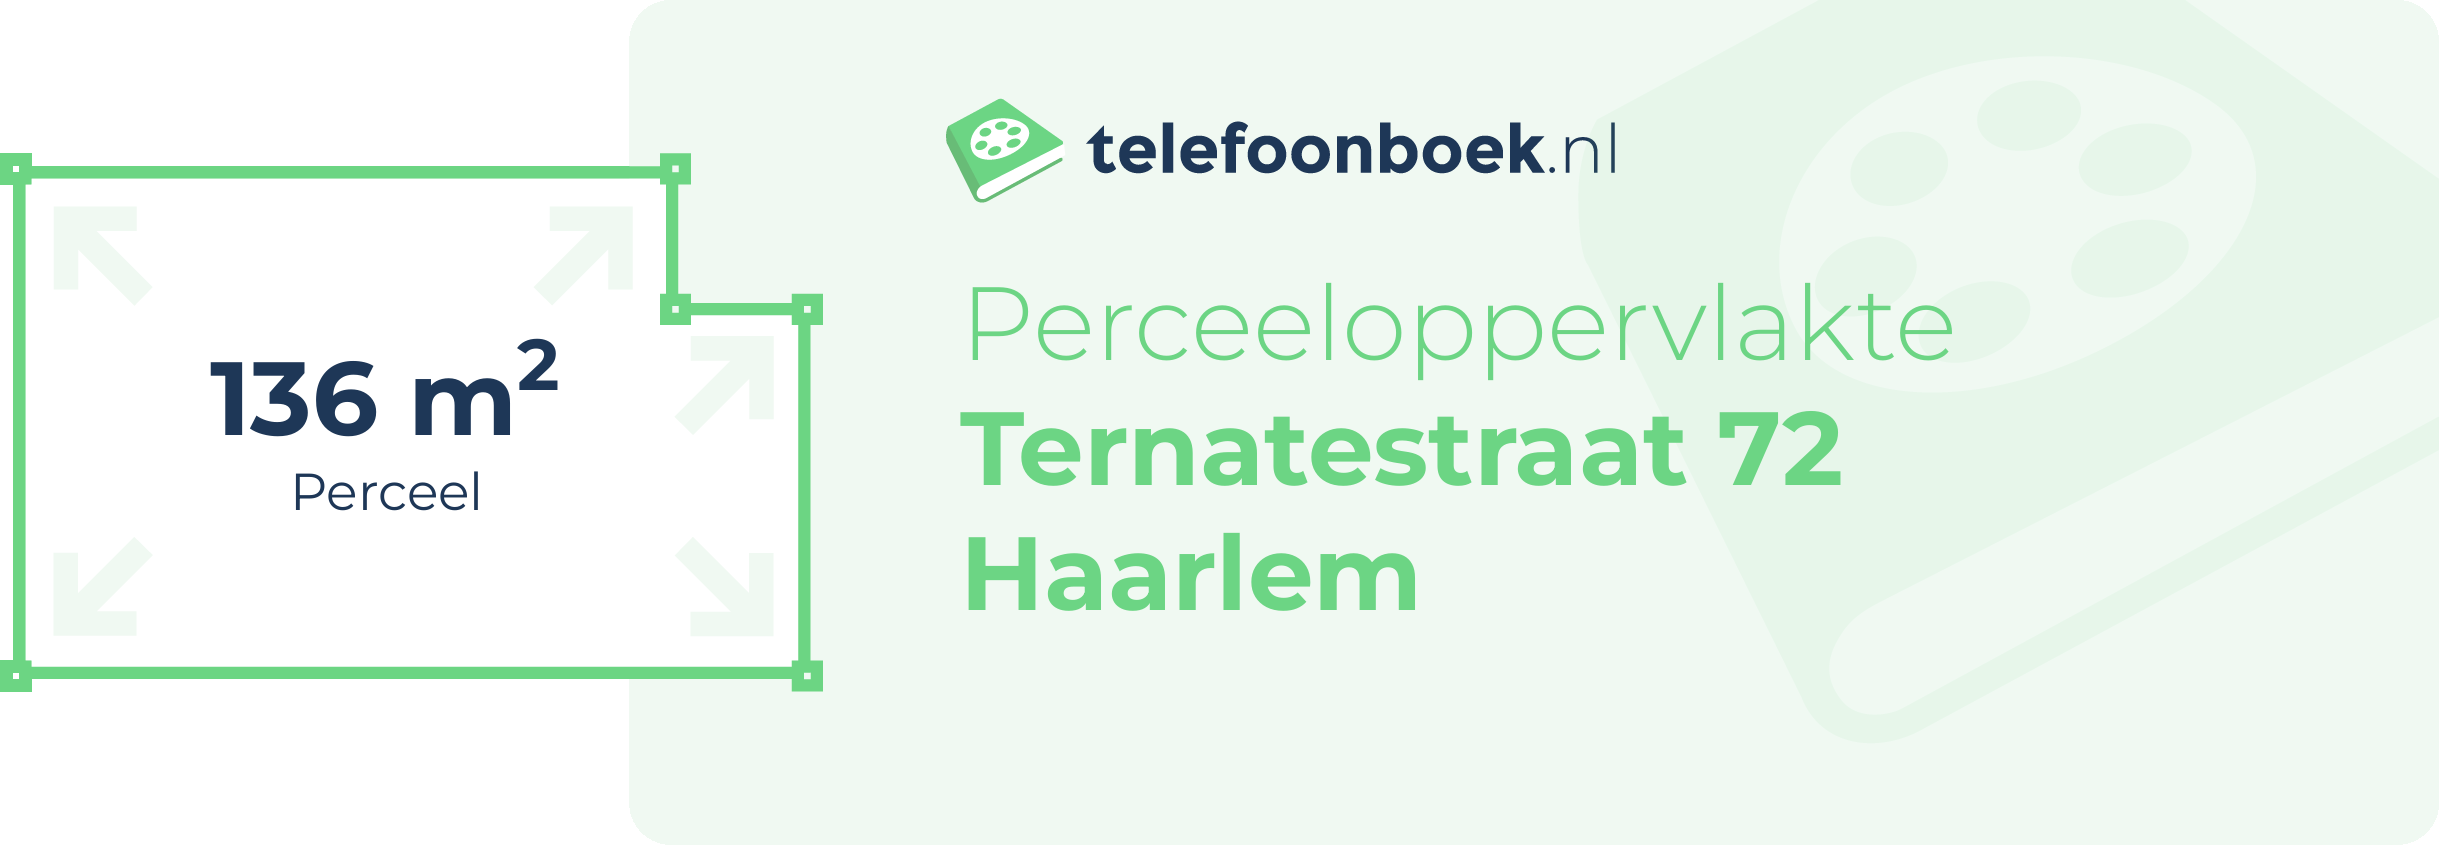 Perceeloppervlakte Ternatestraat 72 Haarlem